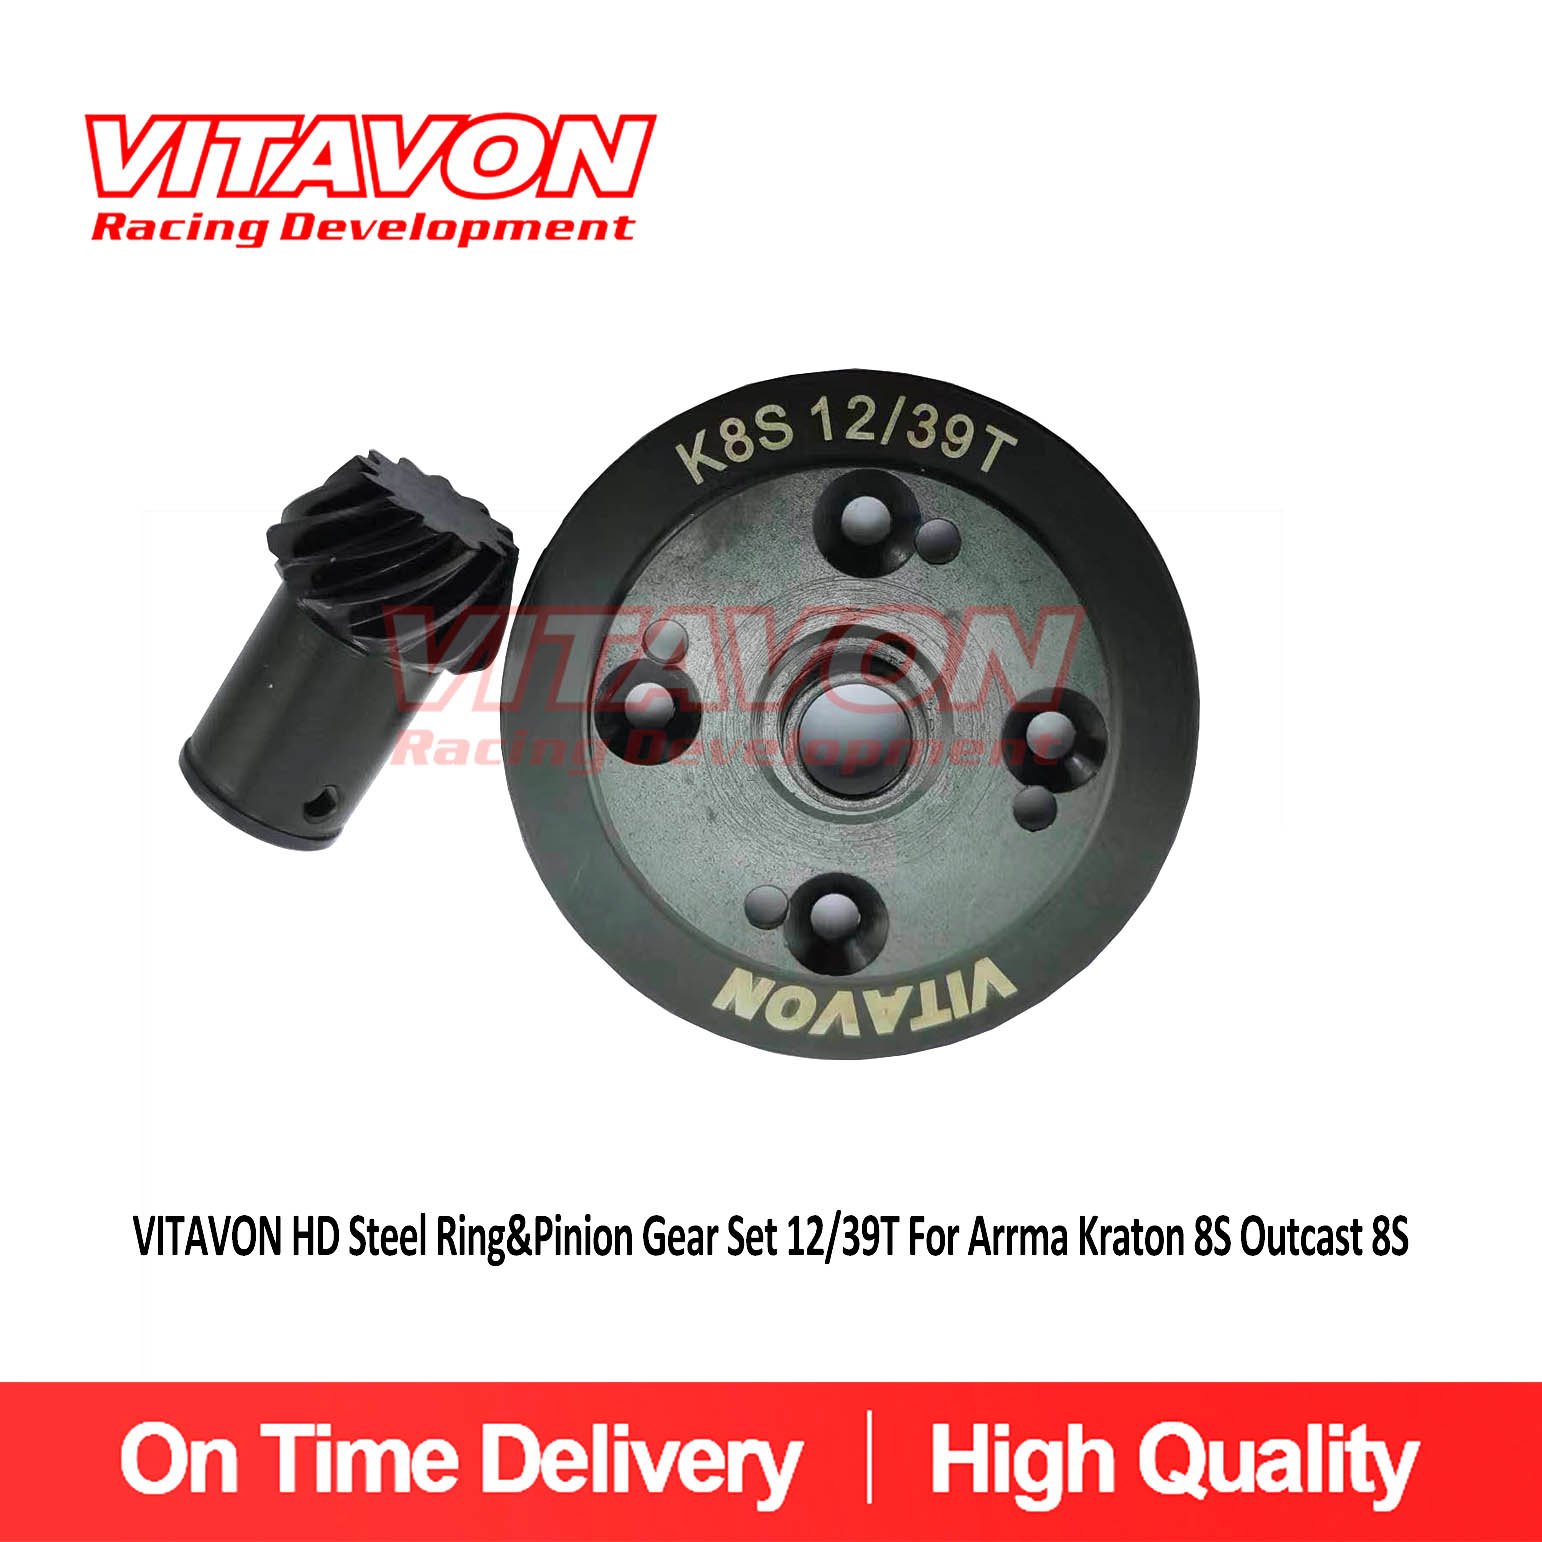 VITAVON HD Steel Ring&Pinion Gear set 12/39T for Arrma Kraton 8S Outcast 8S